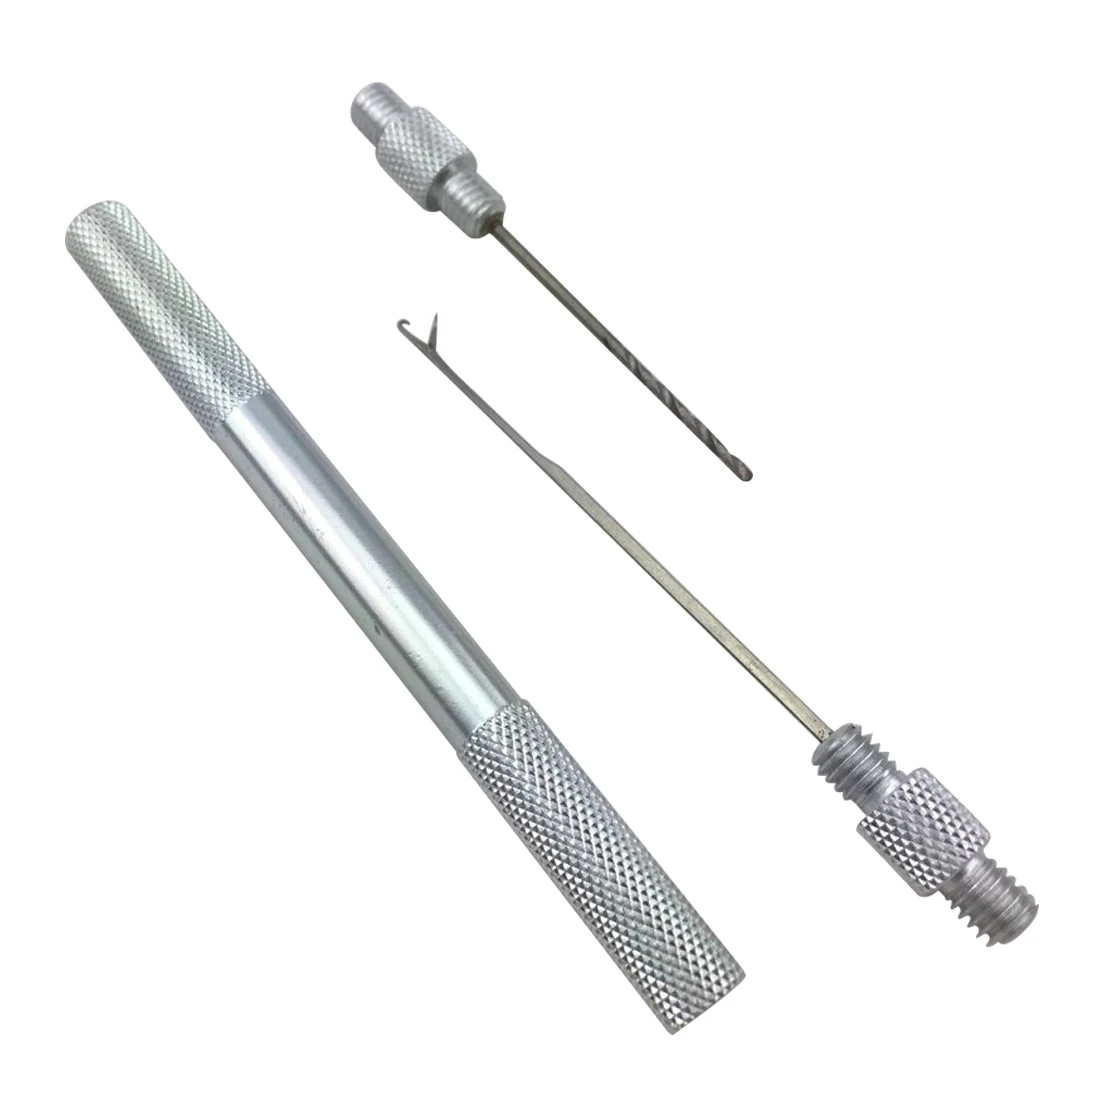 3 In 1 Fishing Bait Needle Useful Tool Set Drill Hook Rig Fo L3K0 Needle S9U0 